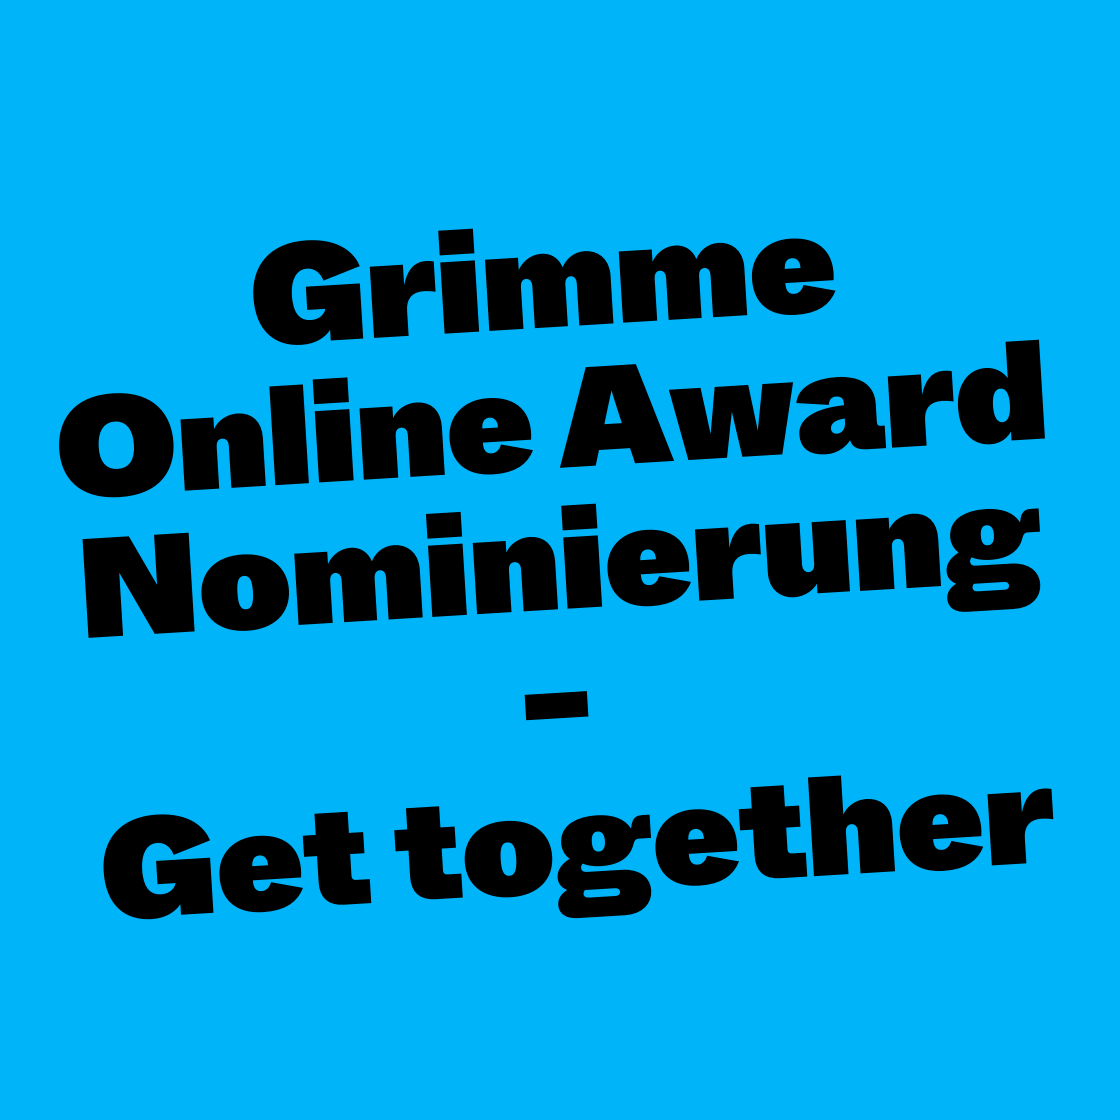 Grimme Online Award Nominierung - Get together